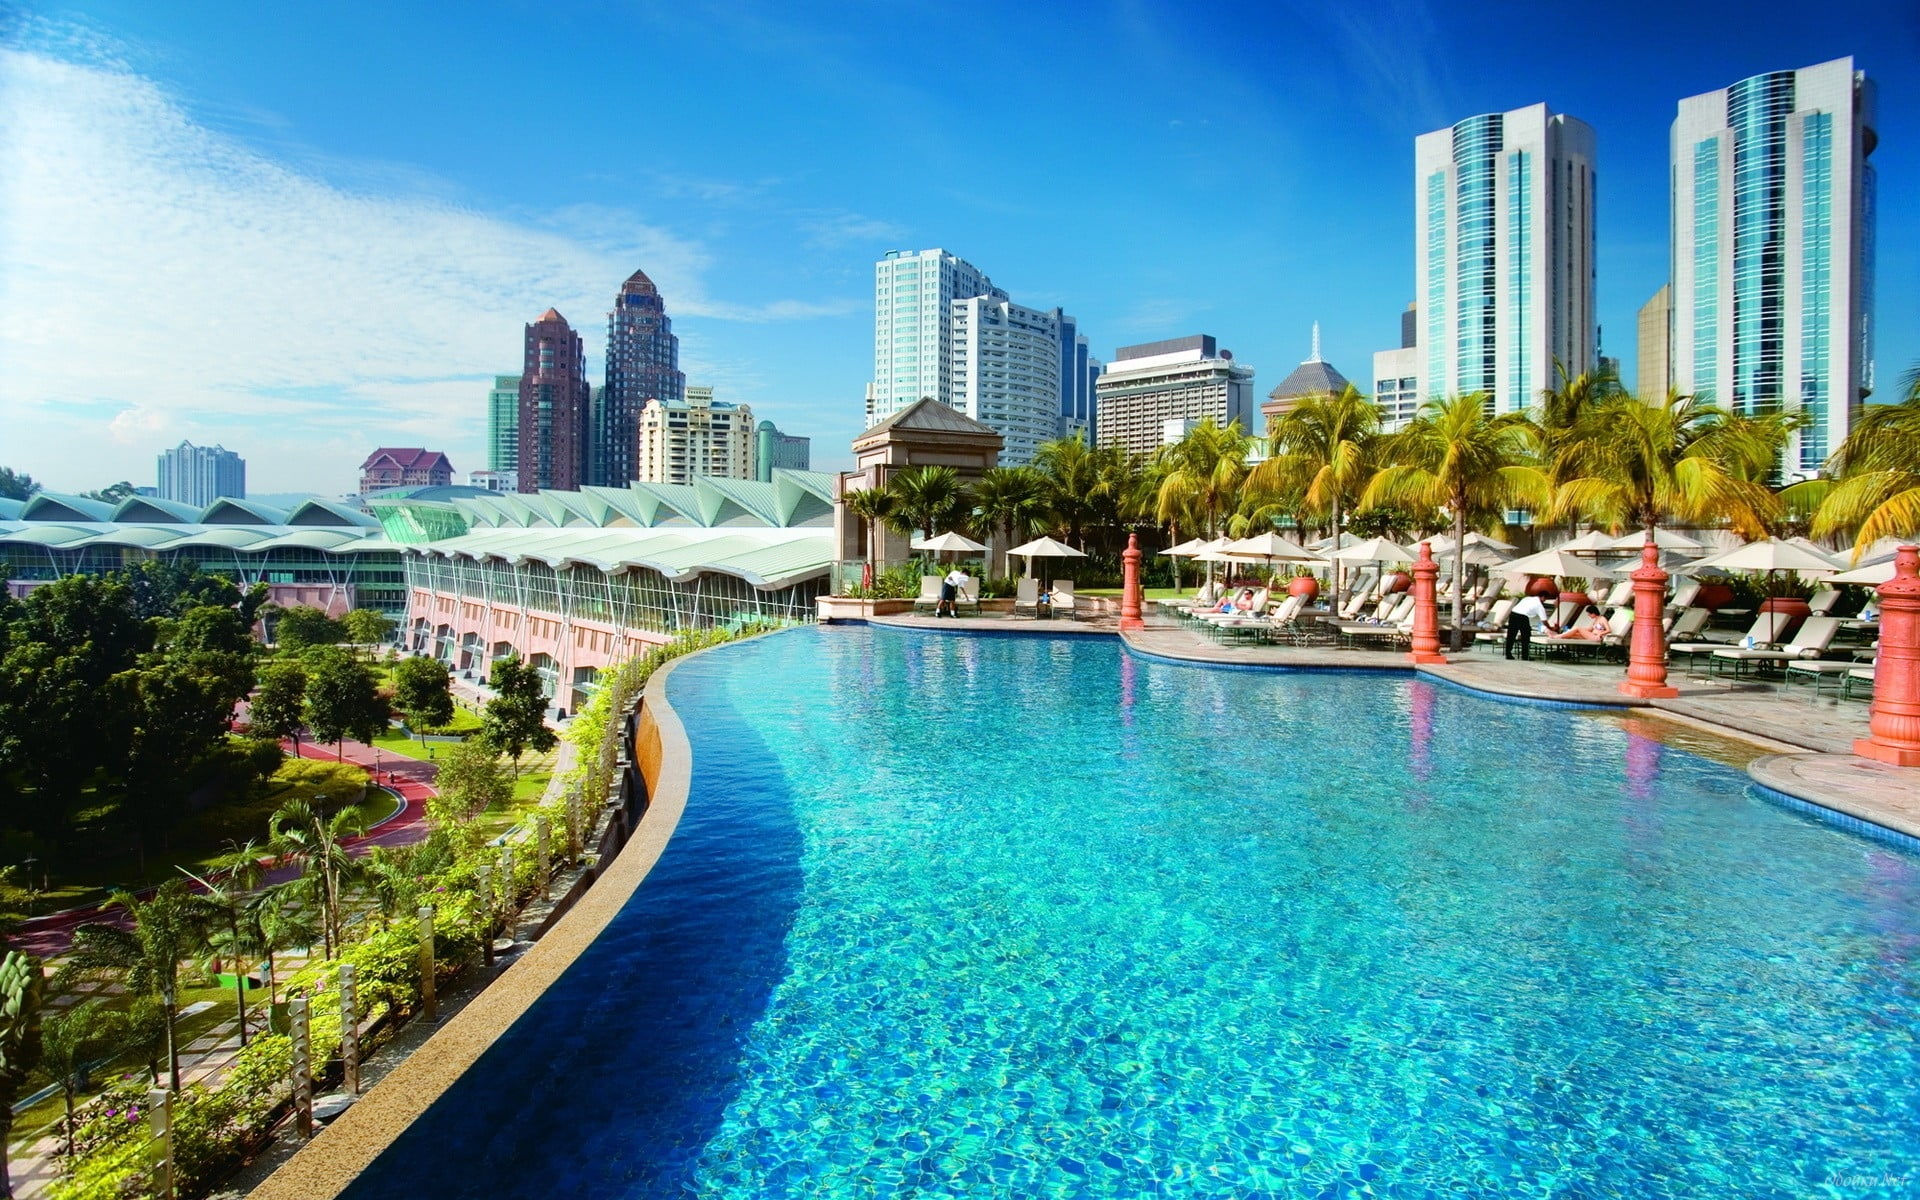 Mandarin Oriental Hotel Kuala Lumpur, concrete swimming pool